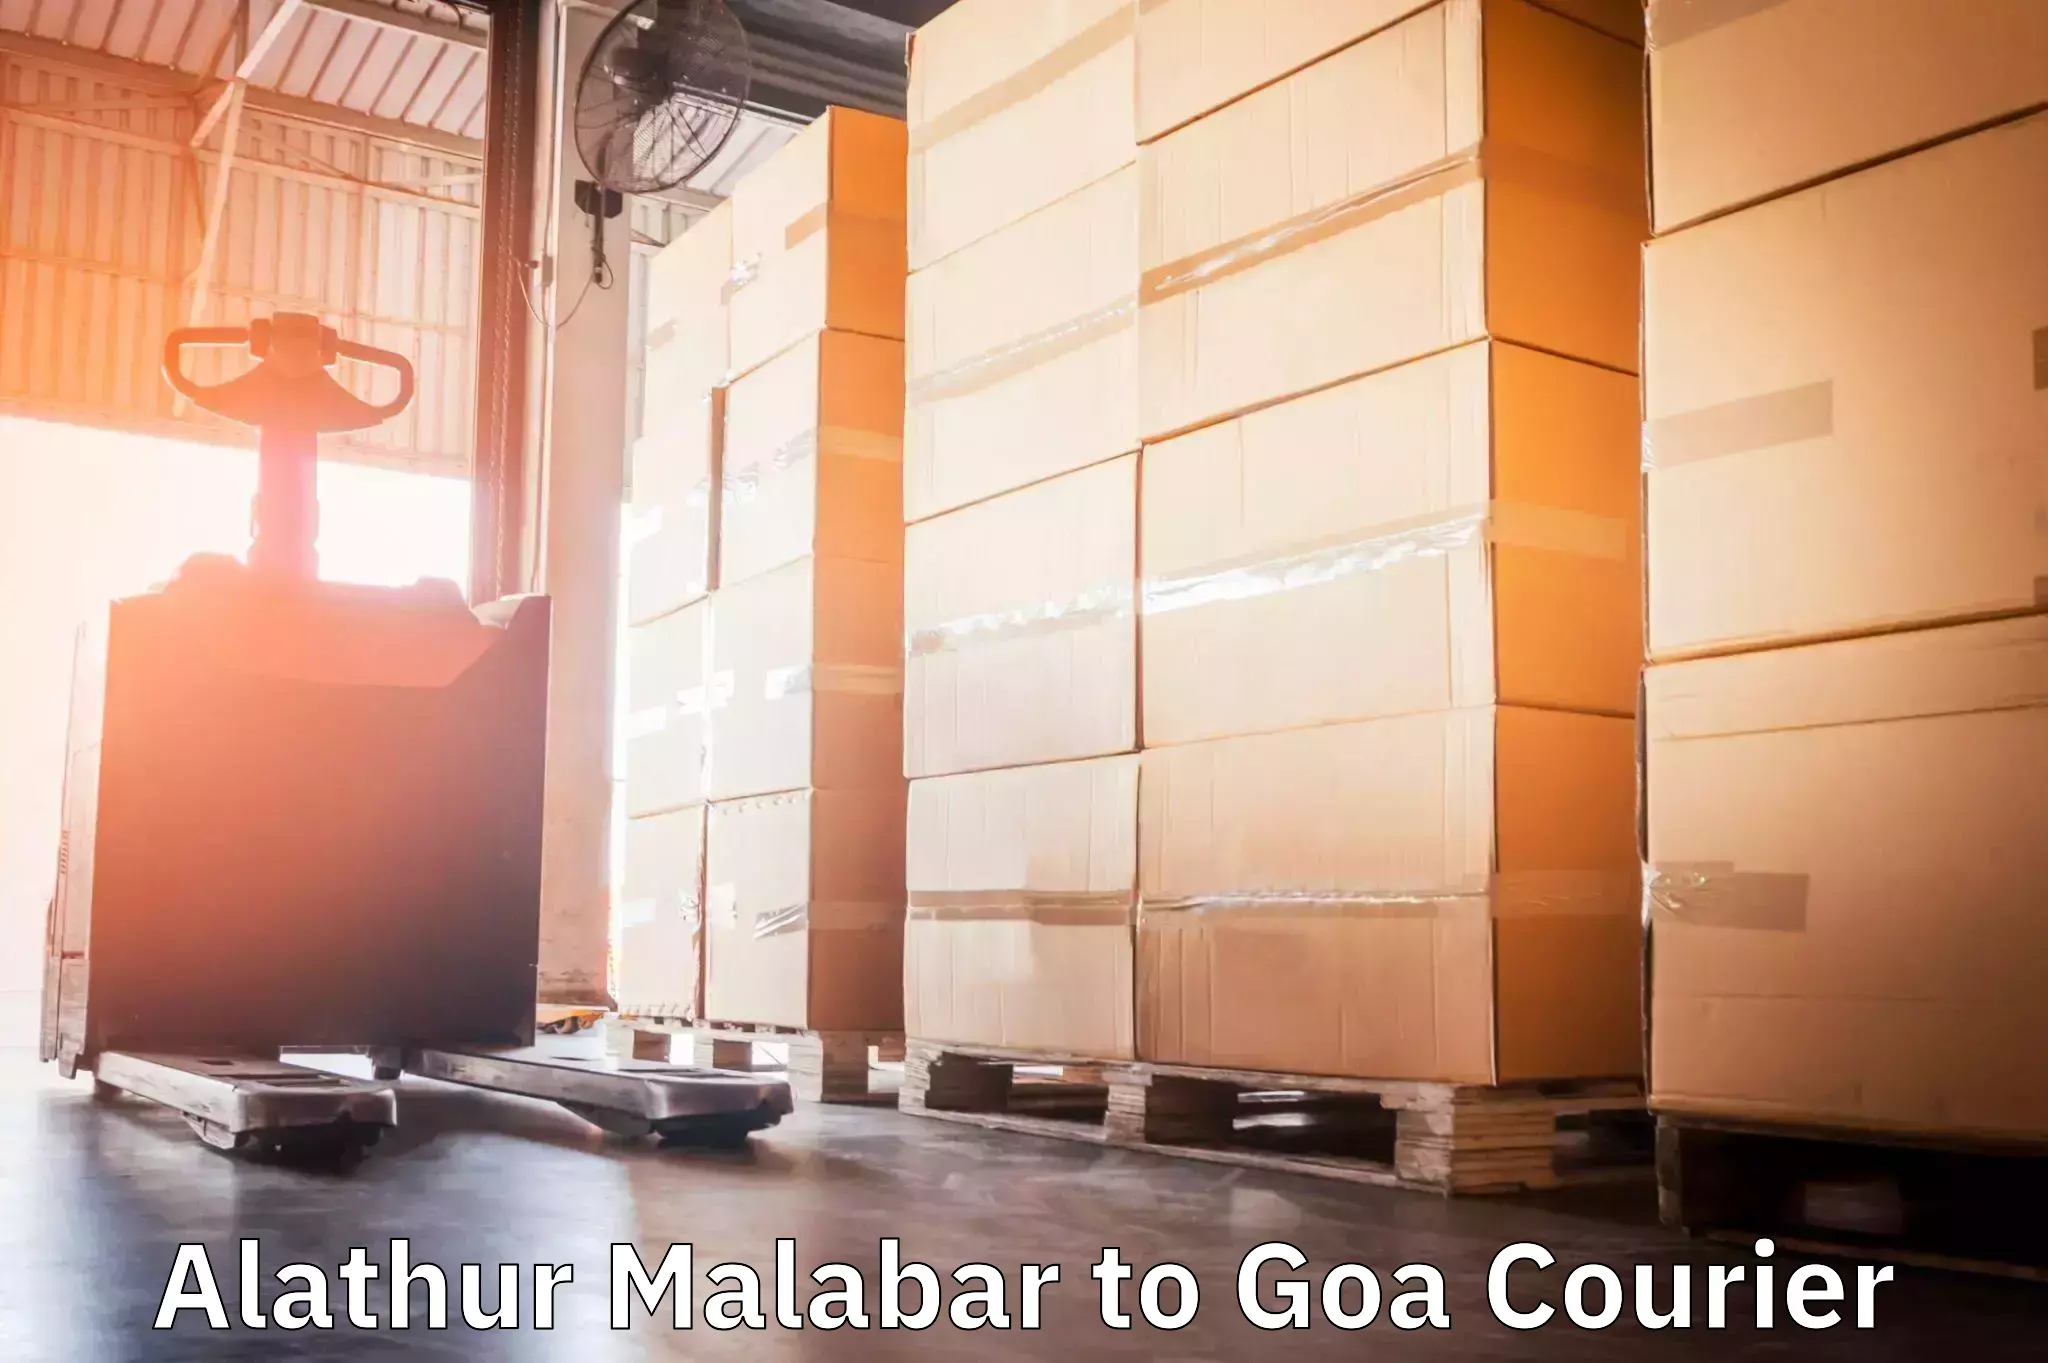 Courier service booking Alathur Malabar to Goa University